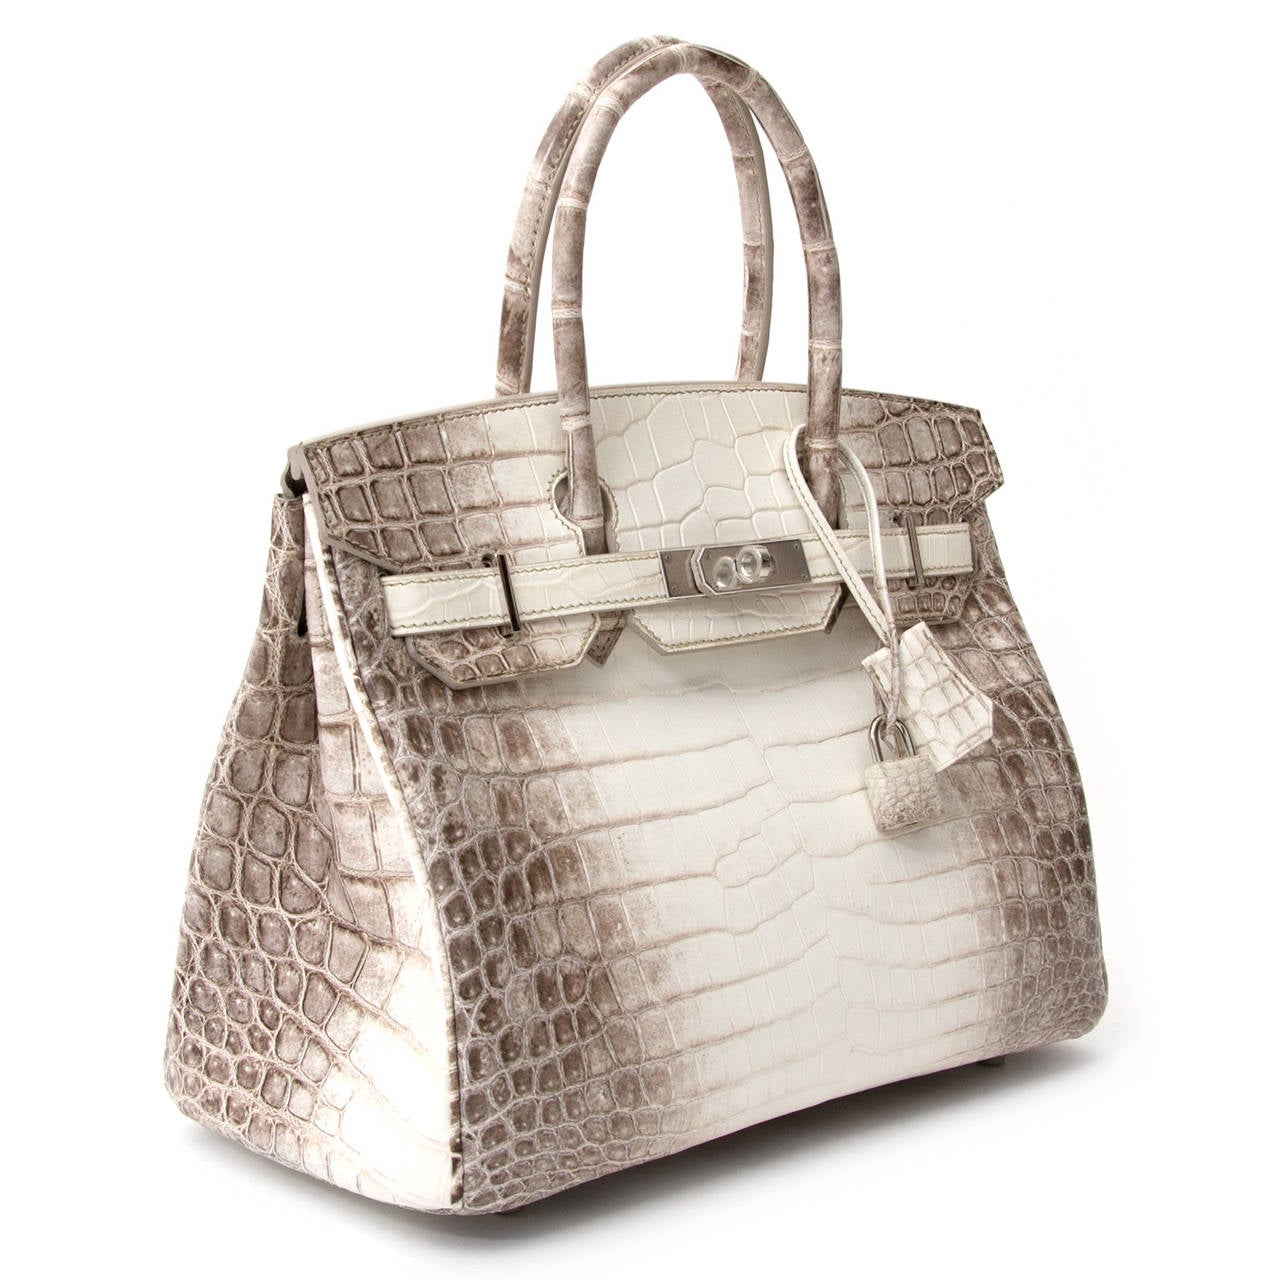 Hermès Birkin Bag Crocodile Niloticus Himalaya Handbag White PHW 30 at 1stdibs